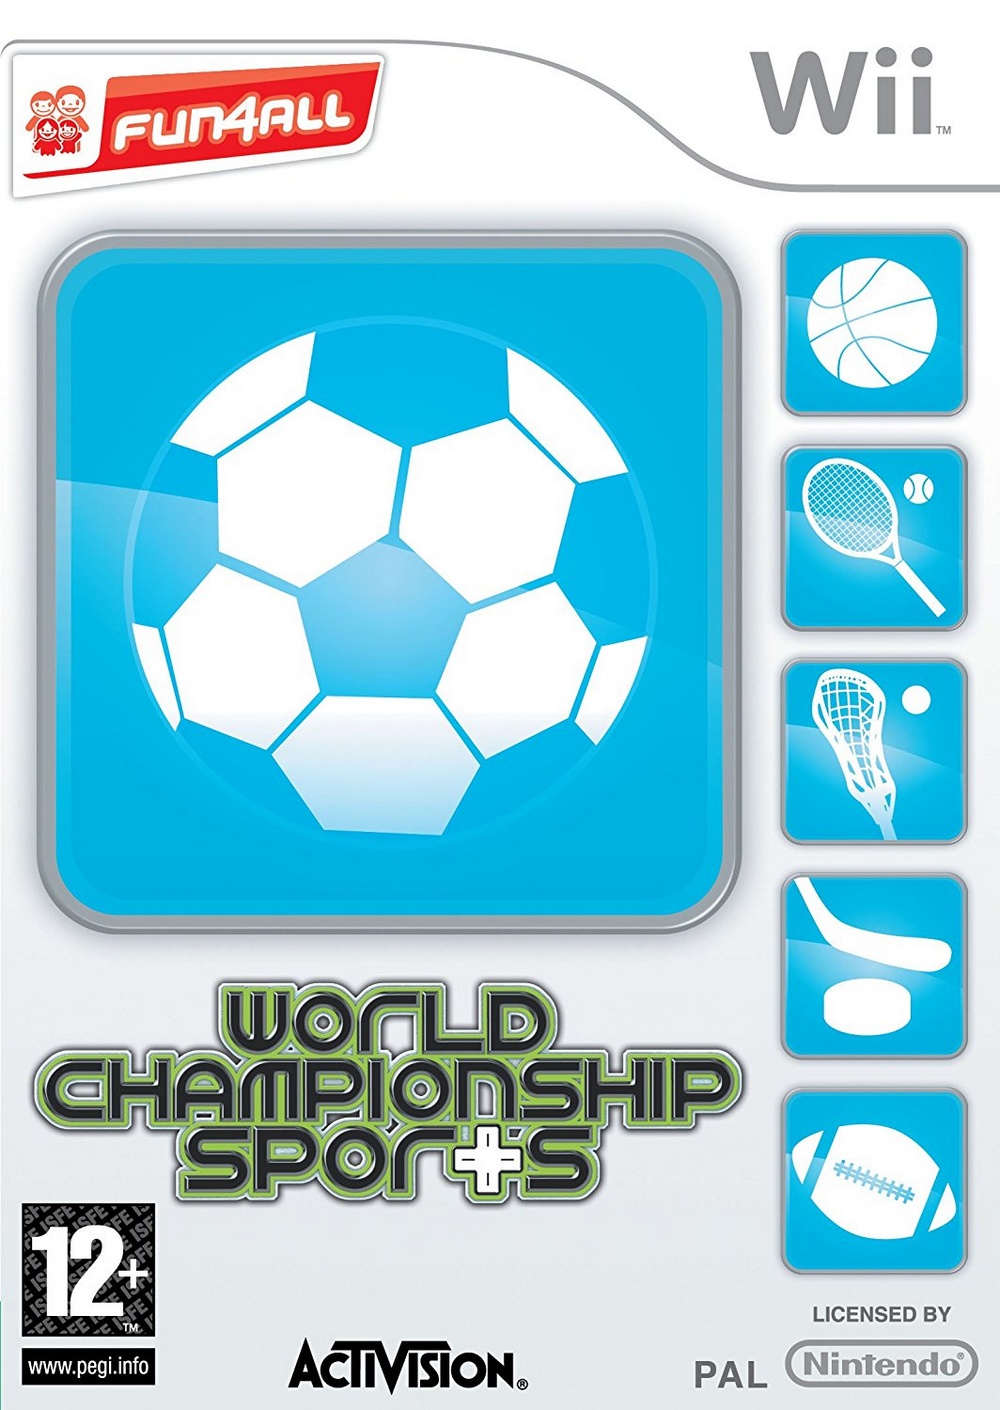 Wii World Championship Sports